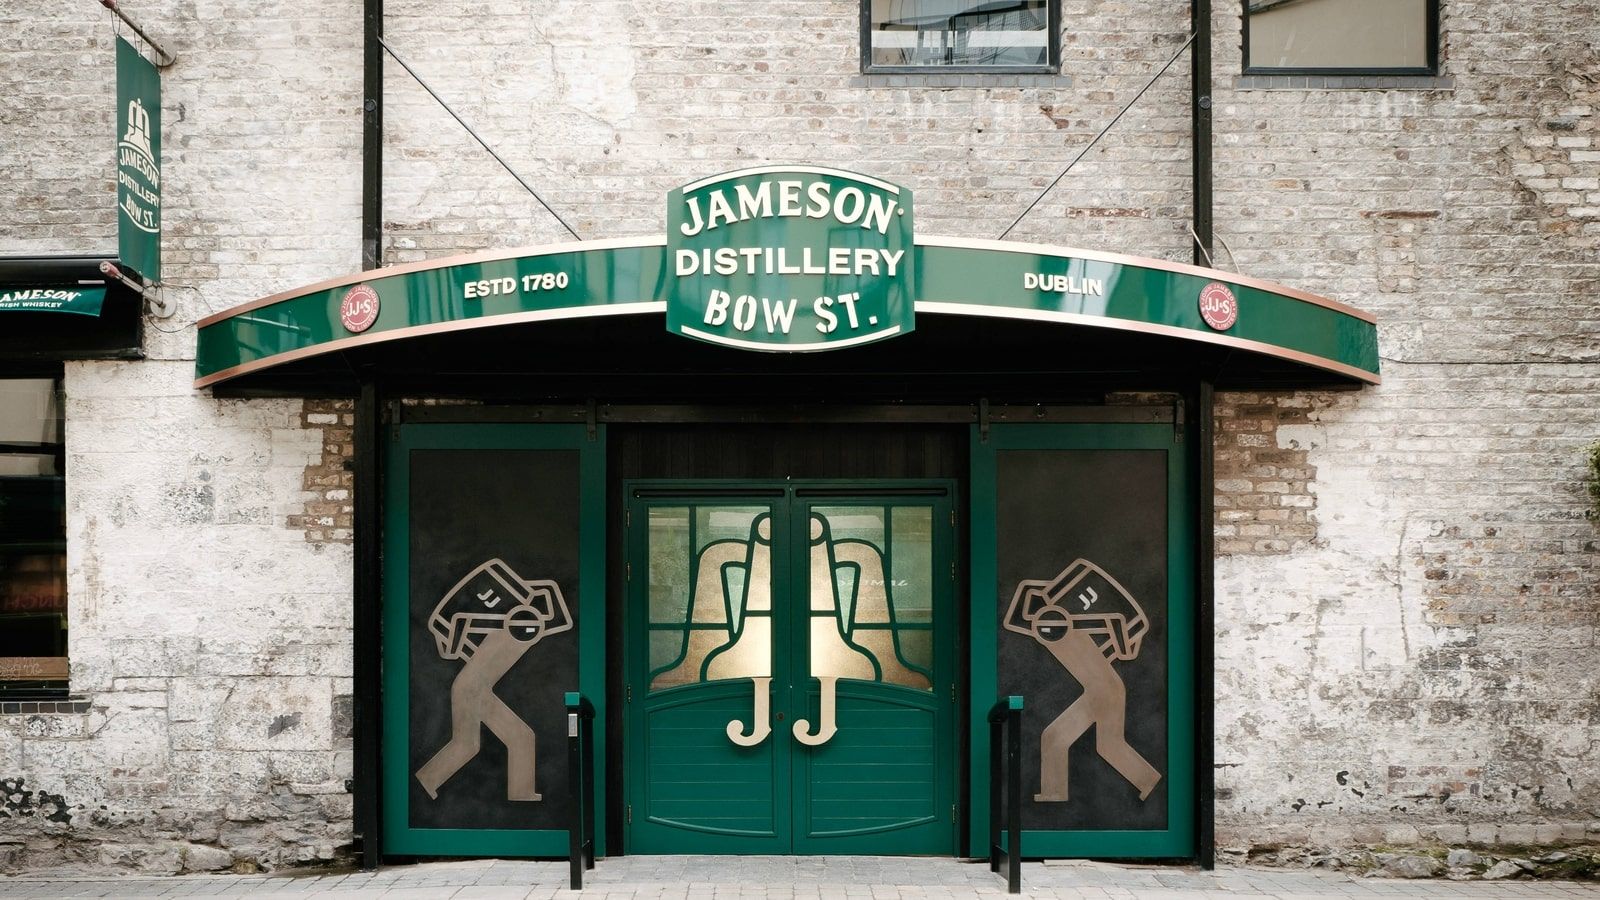 Jameson Distillery Bow Street 1